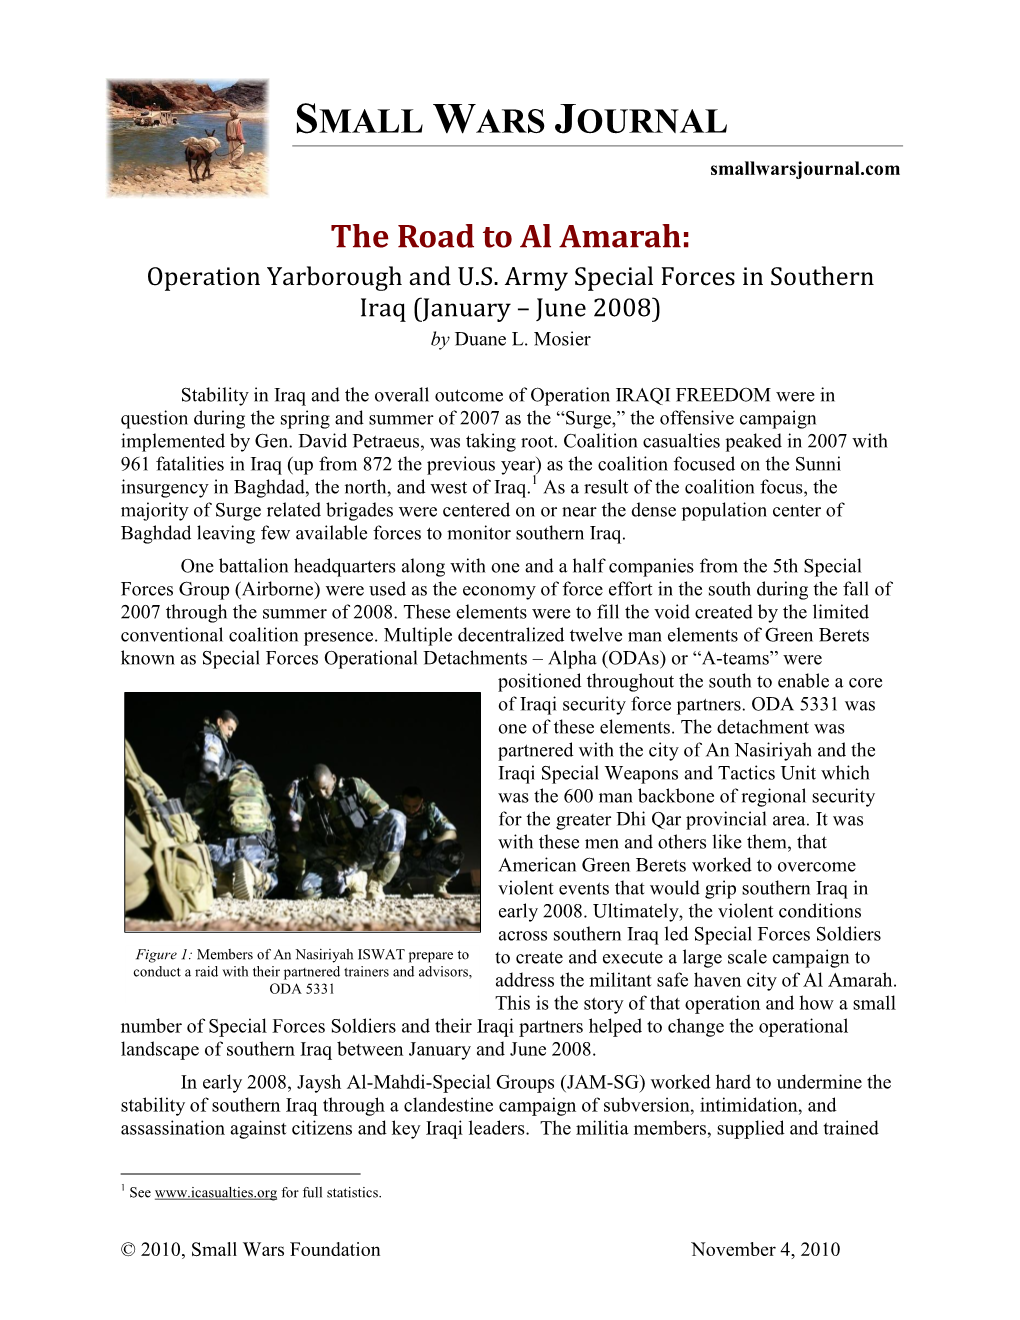 The Road to Al Amarah: Operation Yarborough and U.S